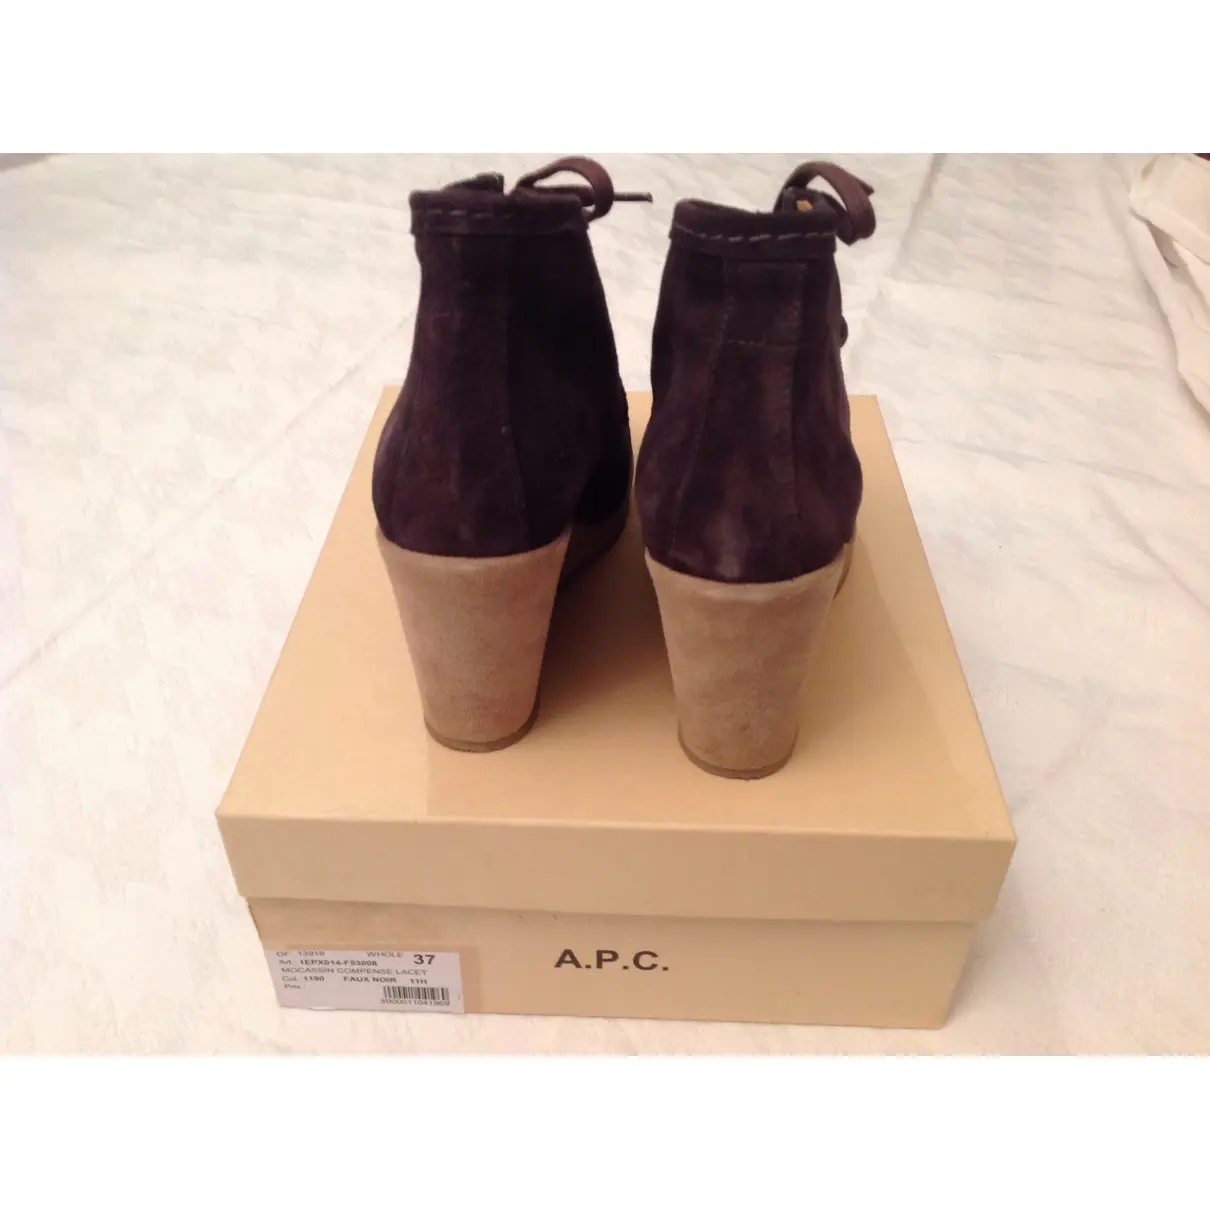 Buy APC Lace up boots online